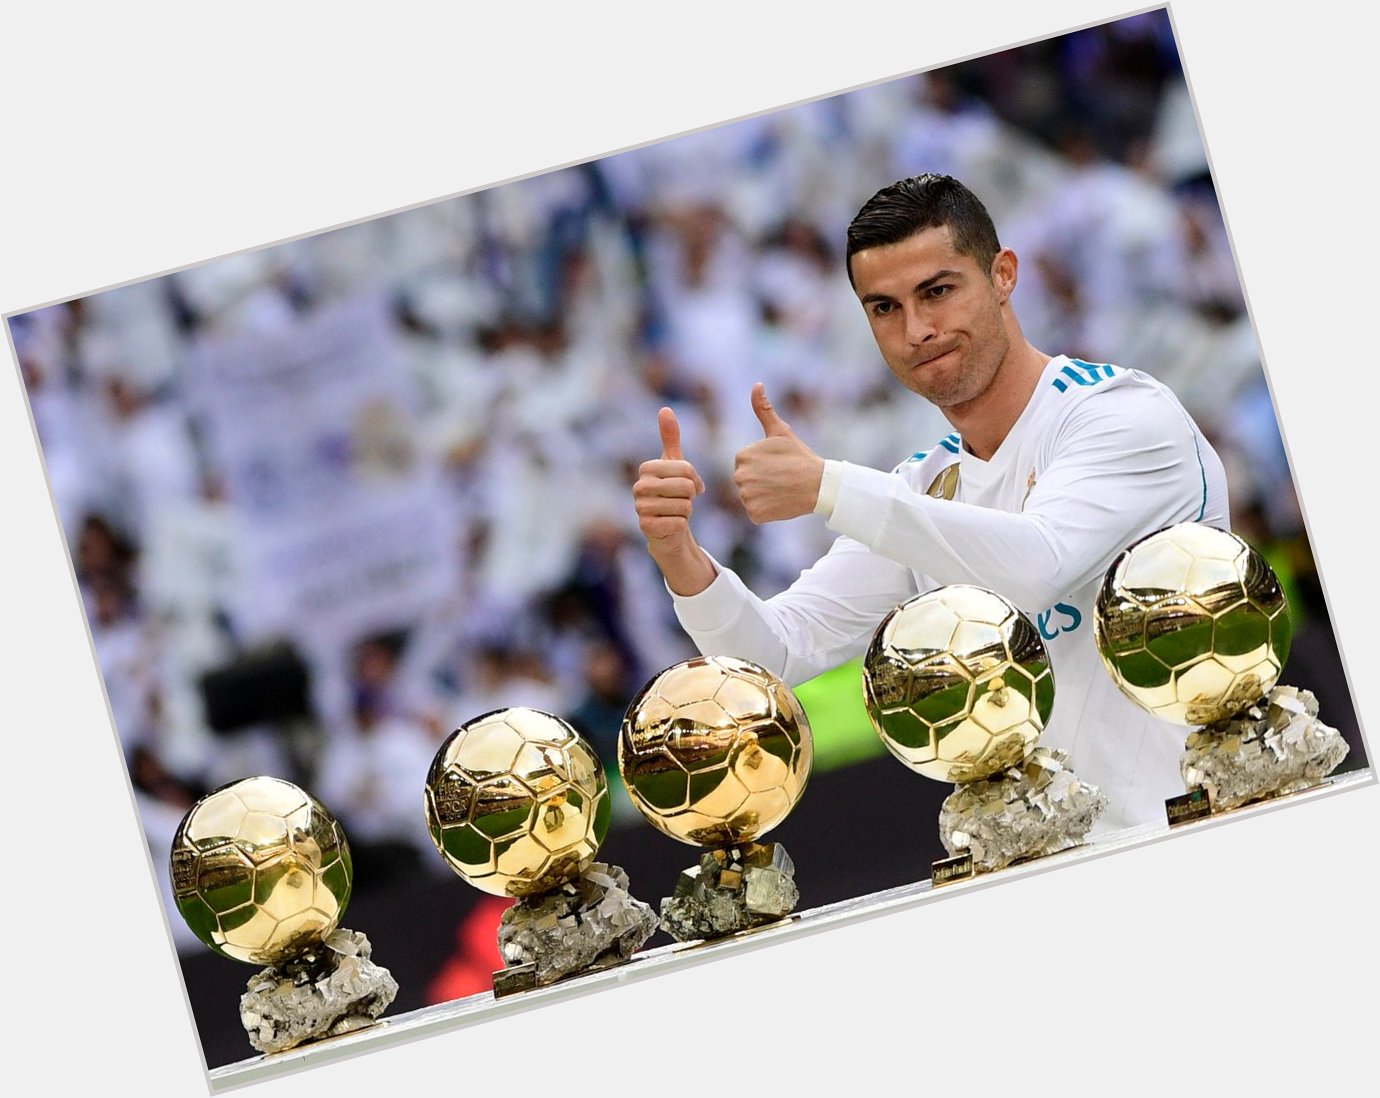 817 games  610 goals  28 trophies 5 Ballon D\ors Happy Birthday, Cristiano Ronaldo 